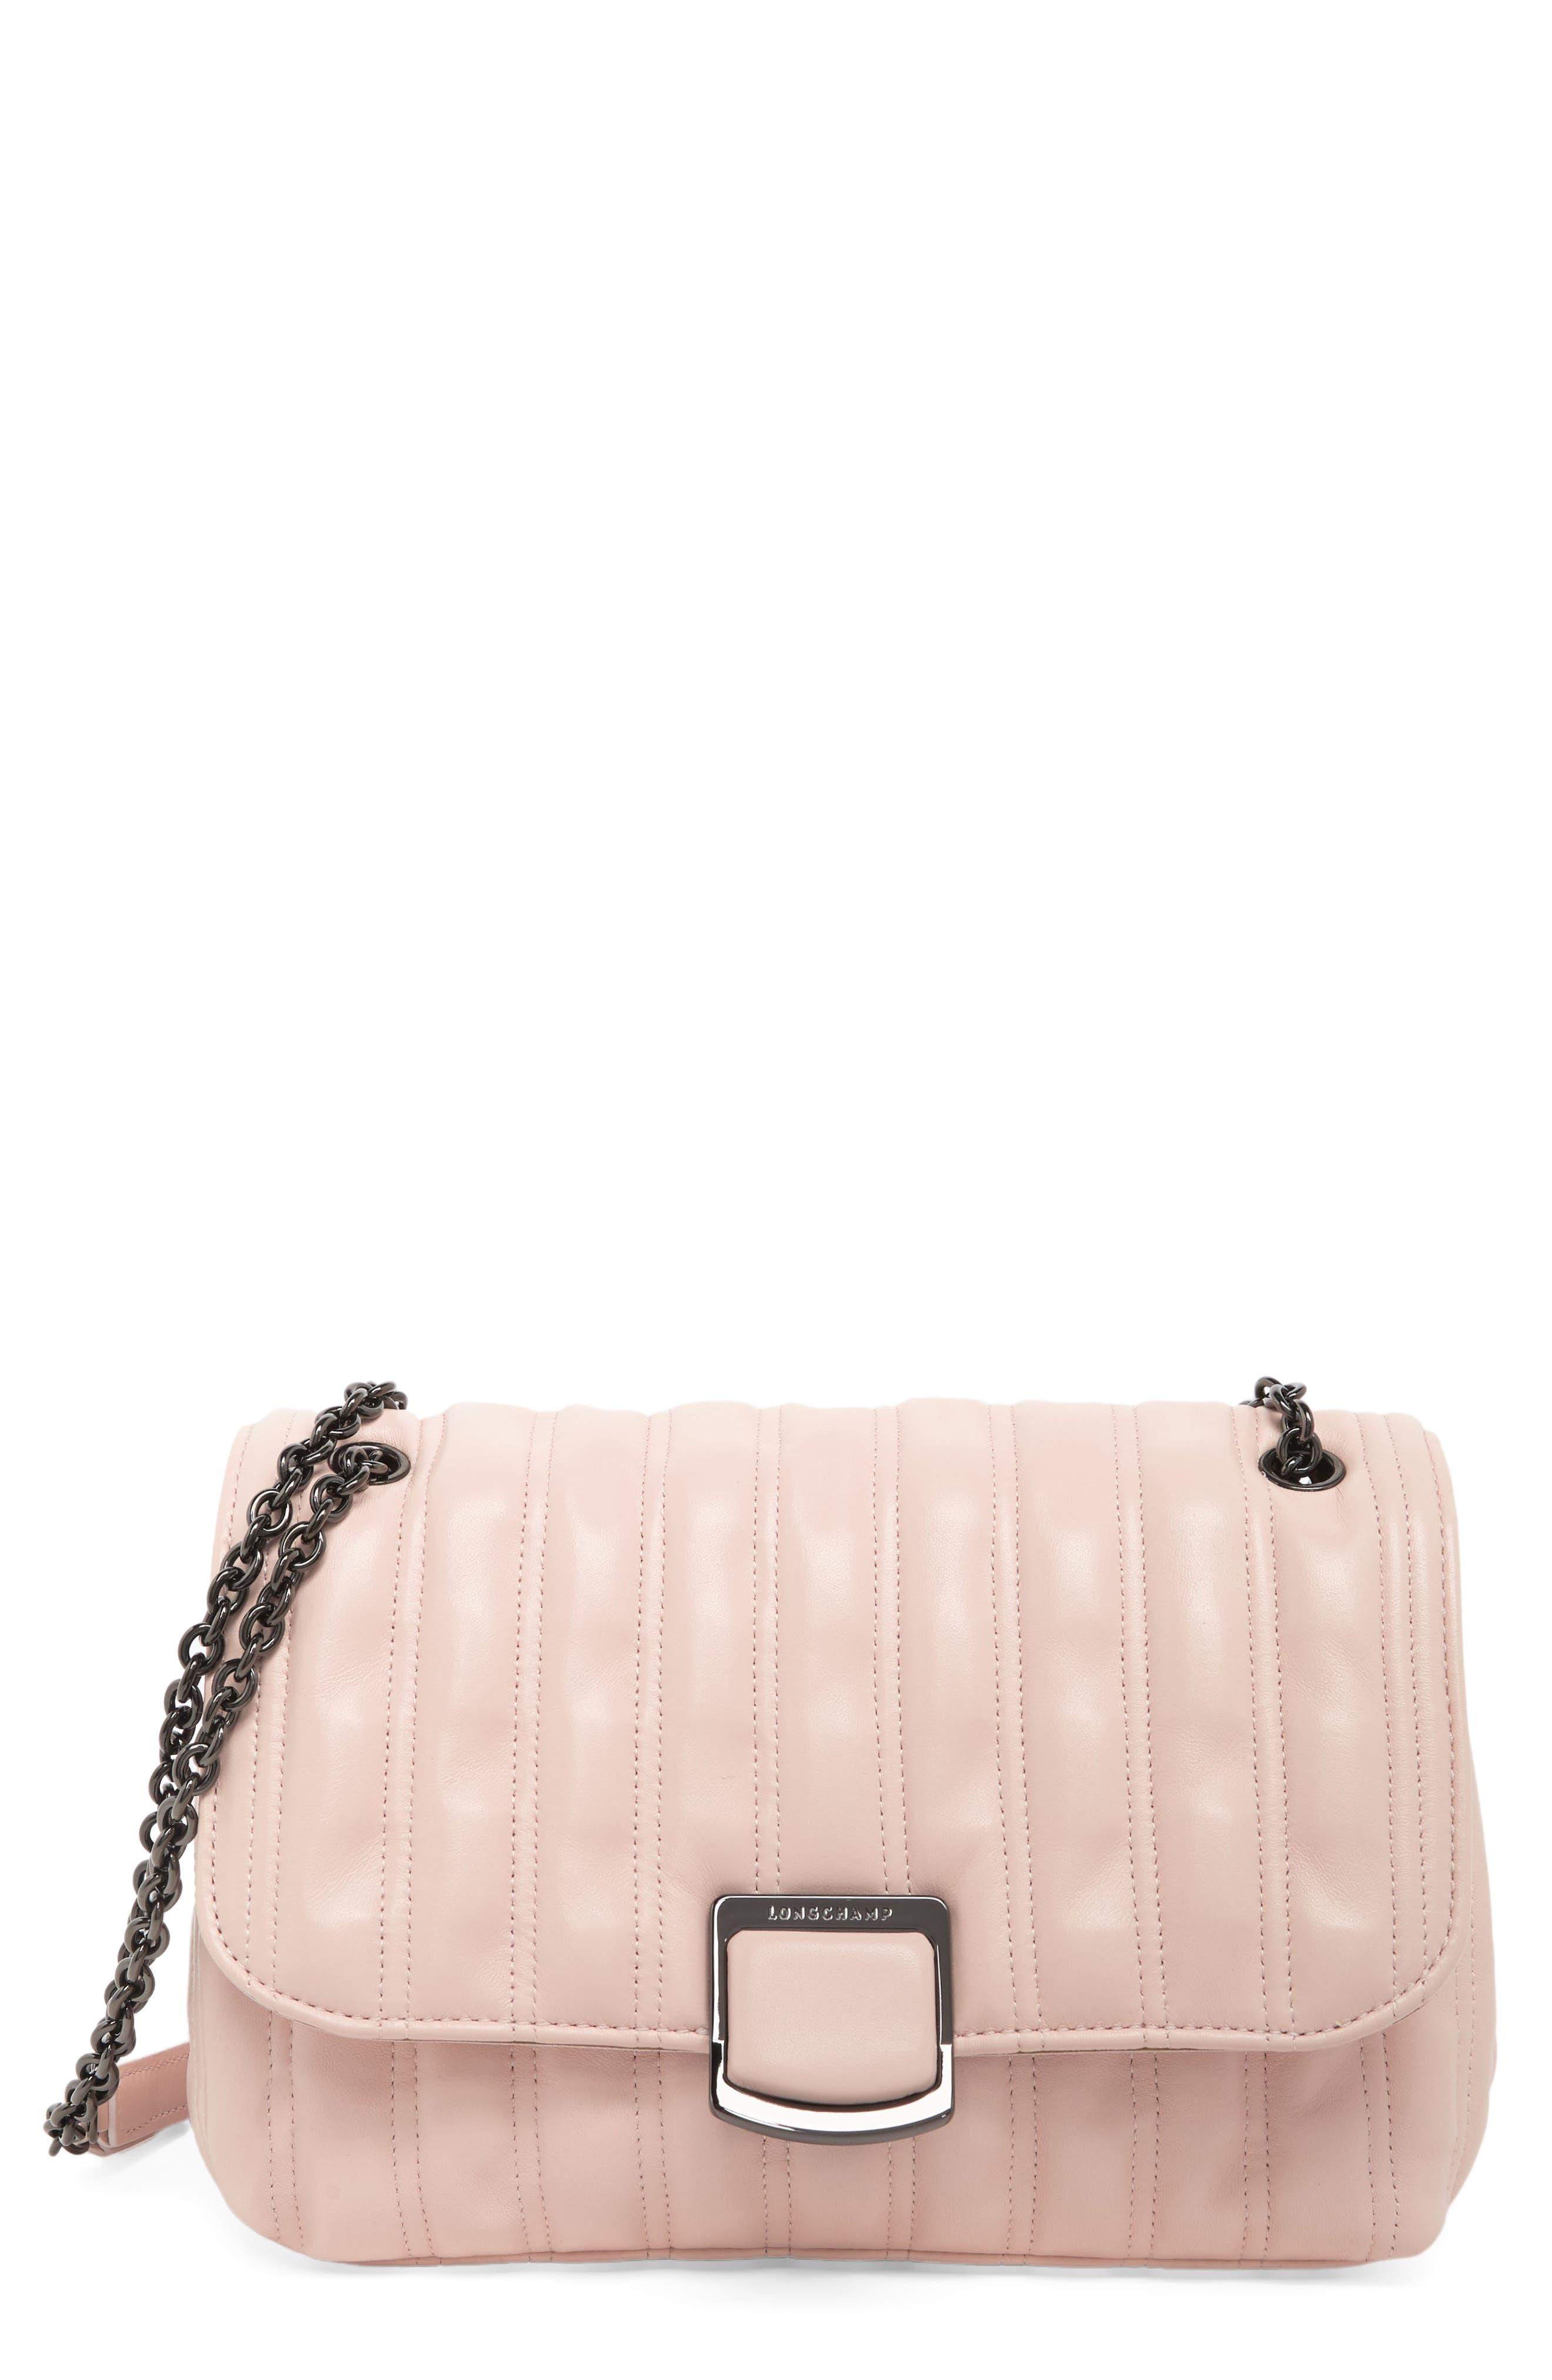 Longchamp Large Brio Convertible Shoulder Bag in Pink | Lyst